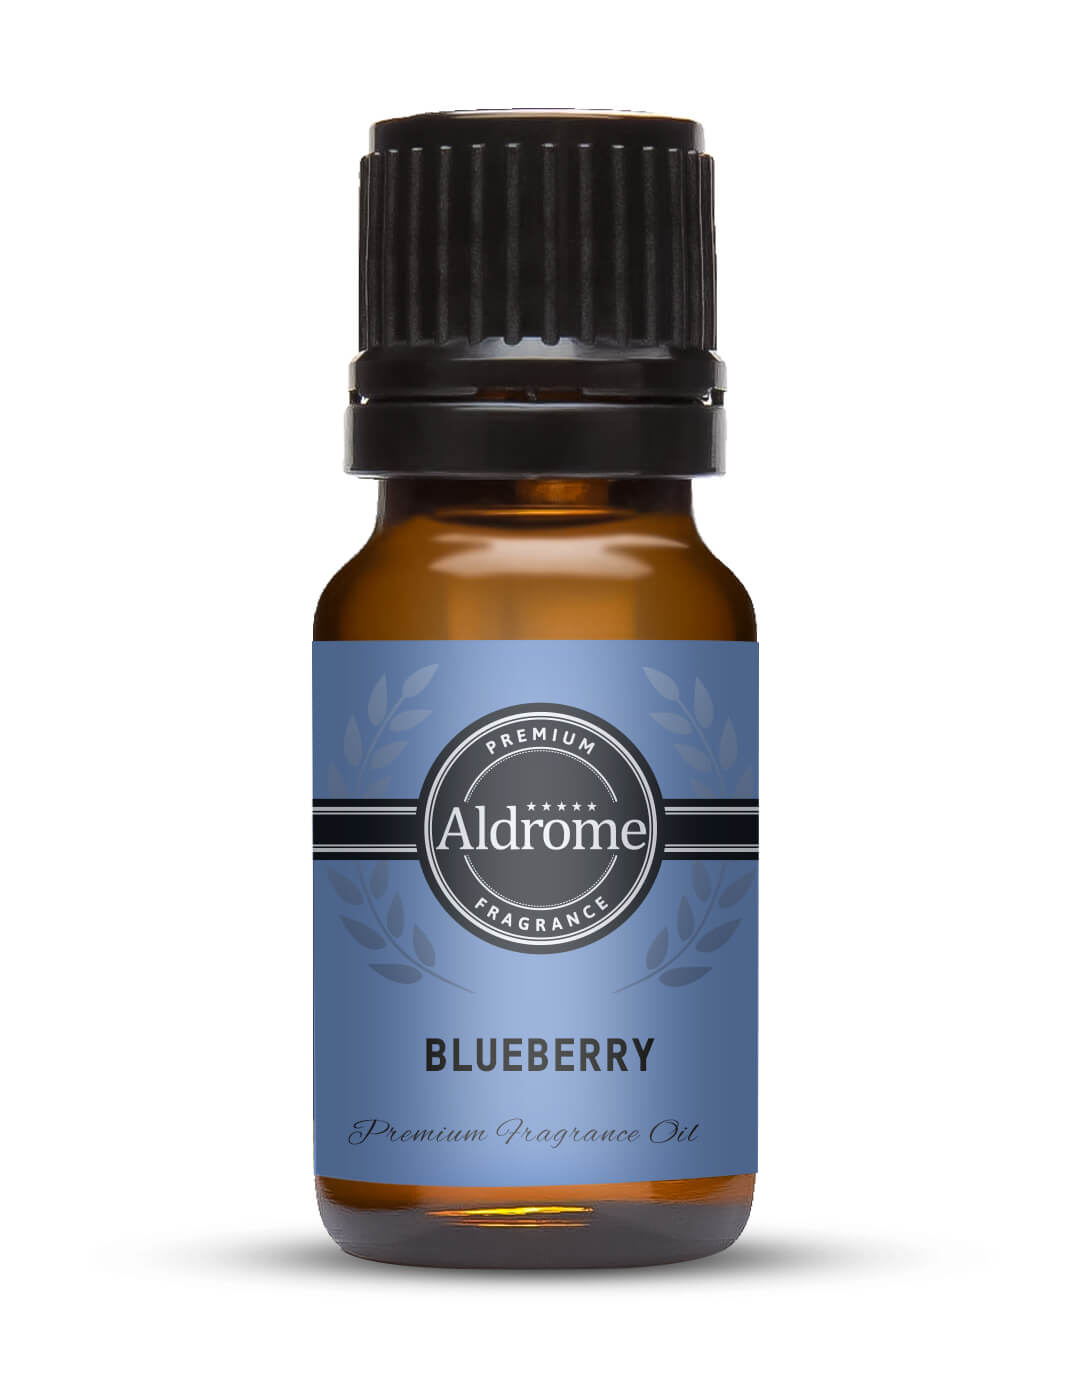 Buy Blueberry Fragrance Oil - 10ml at Best price | Aldrome Premium Fragrance Oil